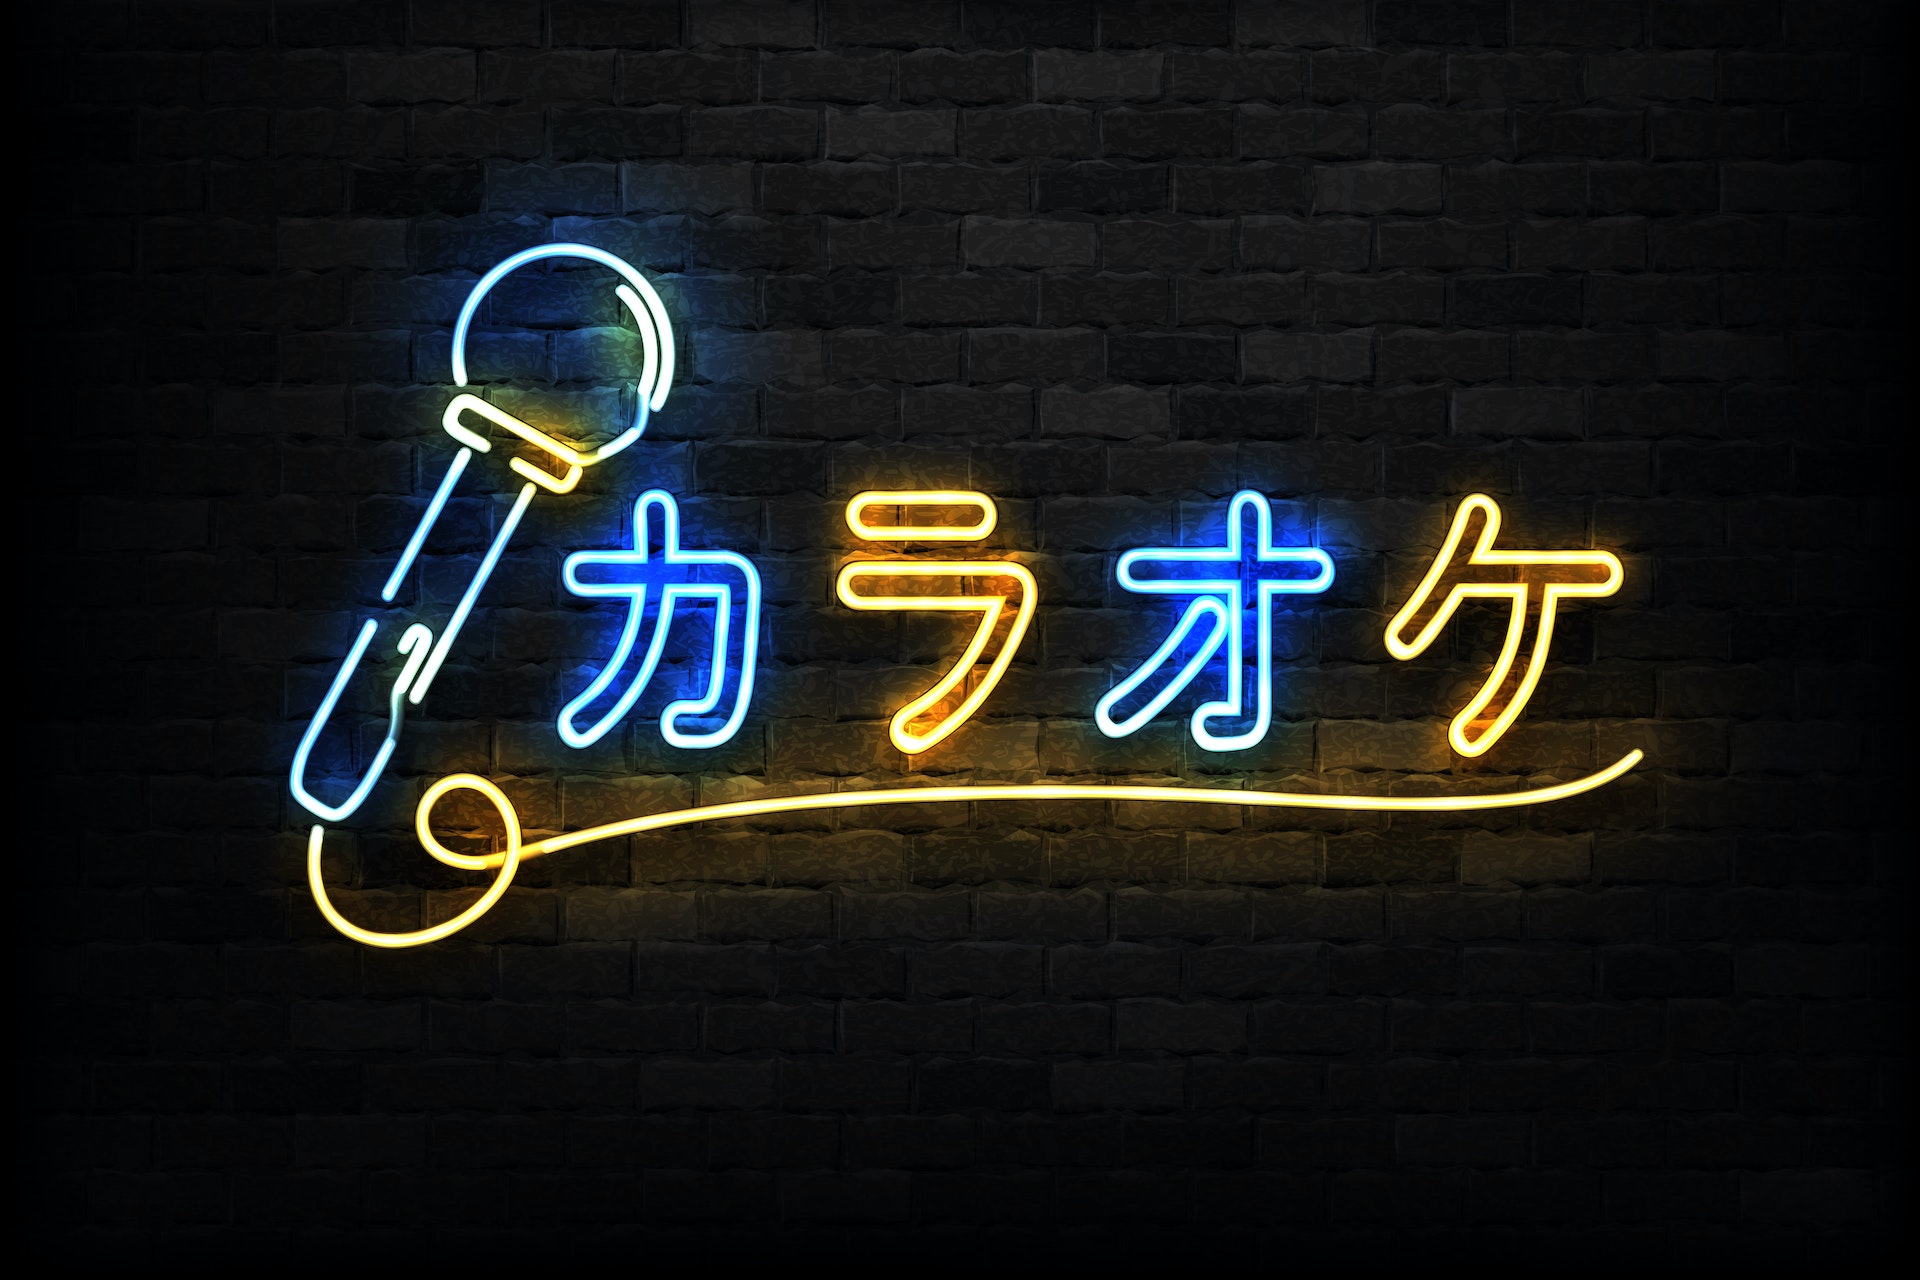 Neon sign of the Karaoke logo in Japanese